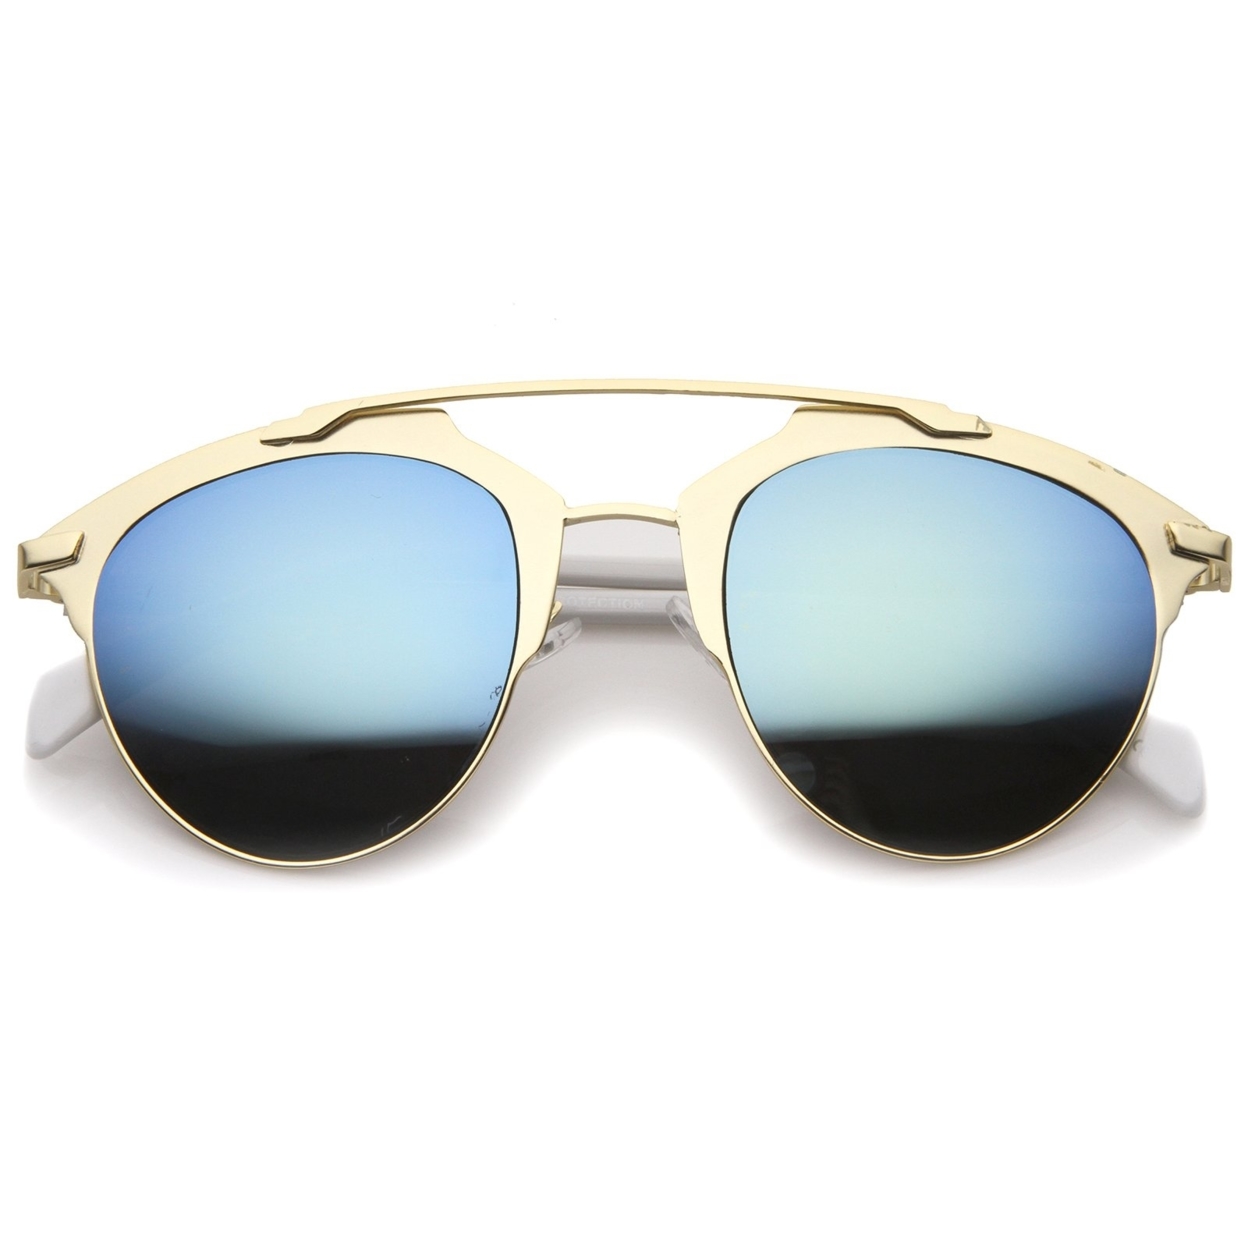 Modern Fashion Metal Double Bridge Mirror Lens Pantos Aviator Sunglasses 50mm - Gold-Tortoise / Brown Mirror